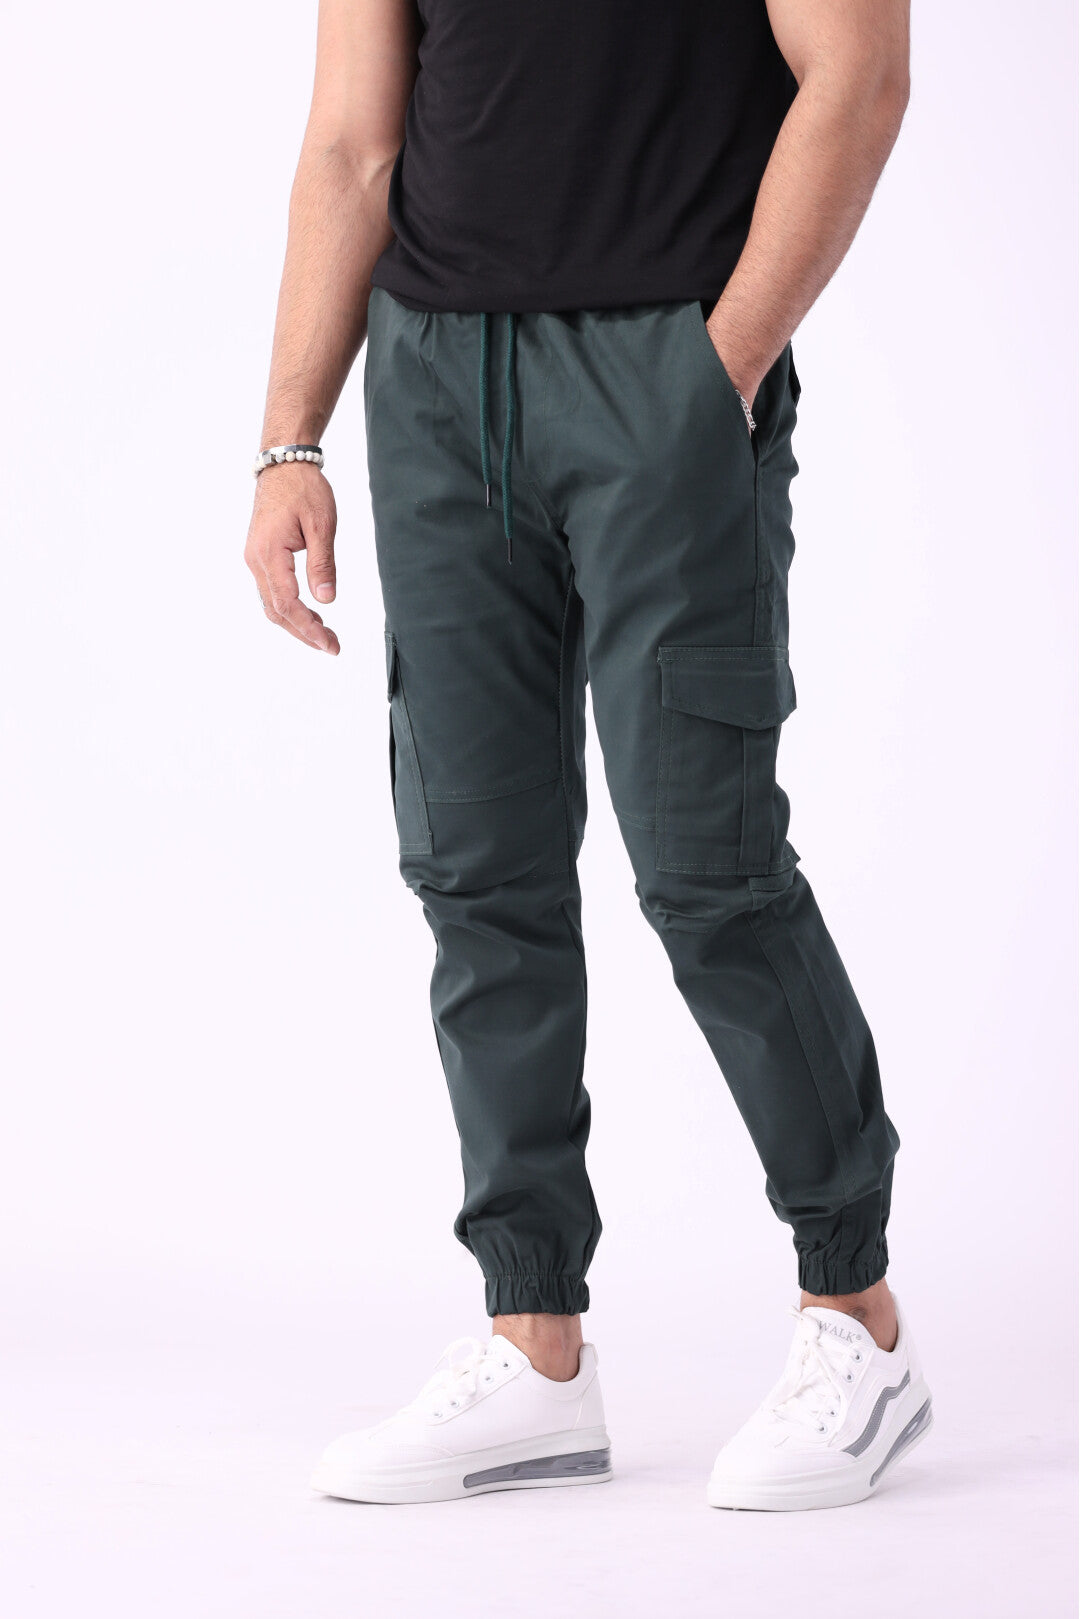 Cargo Trousers for Men - 6 Pocket Trousers - 6 Pocket Cargo Trousers in all  Colors - Cargo Trouser- Mens Trousers – Trousers for Men - 6 Pocket Trouser  grey